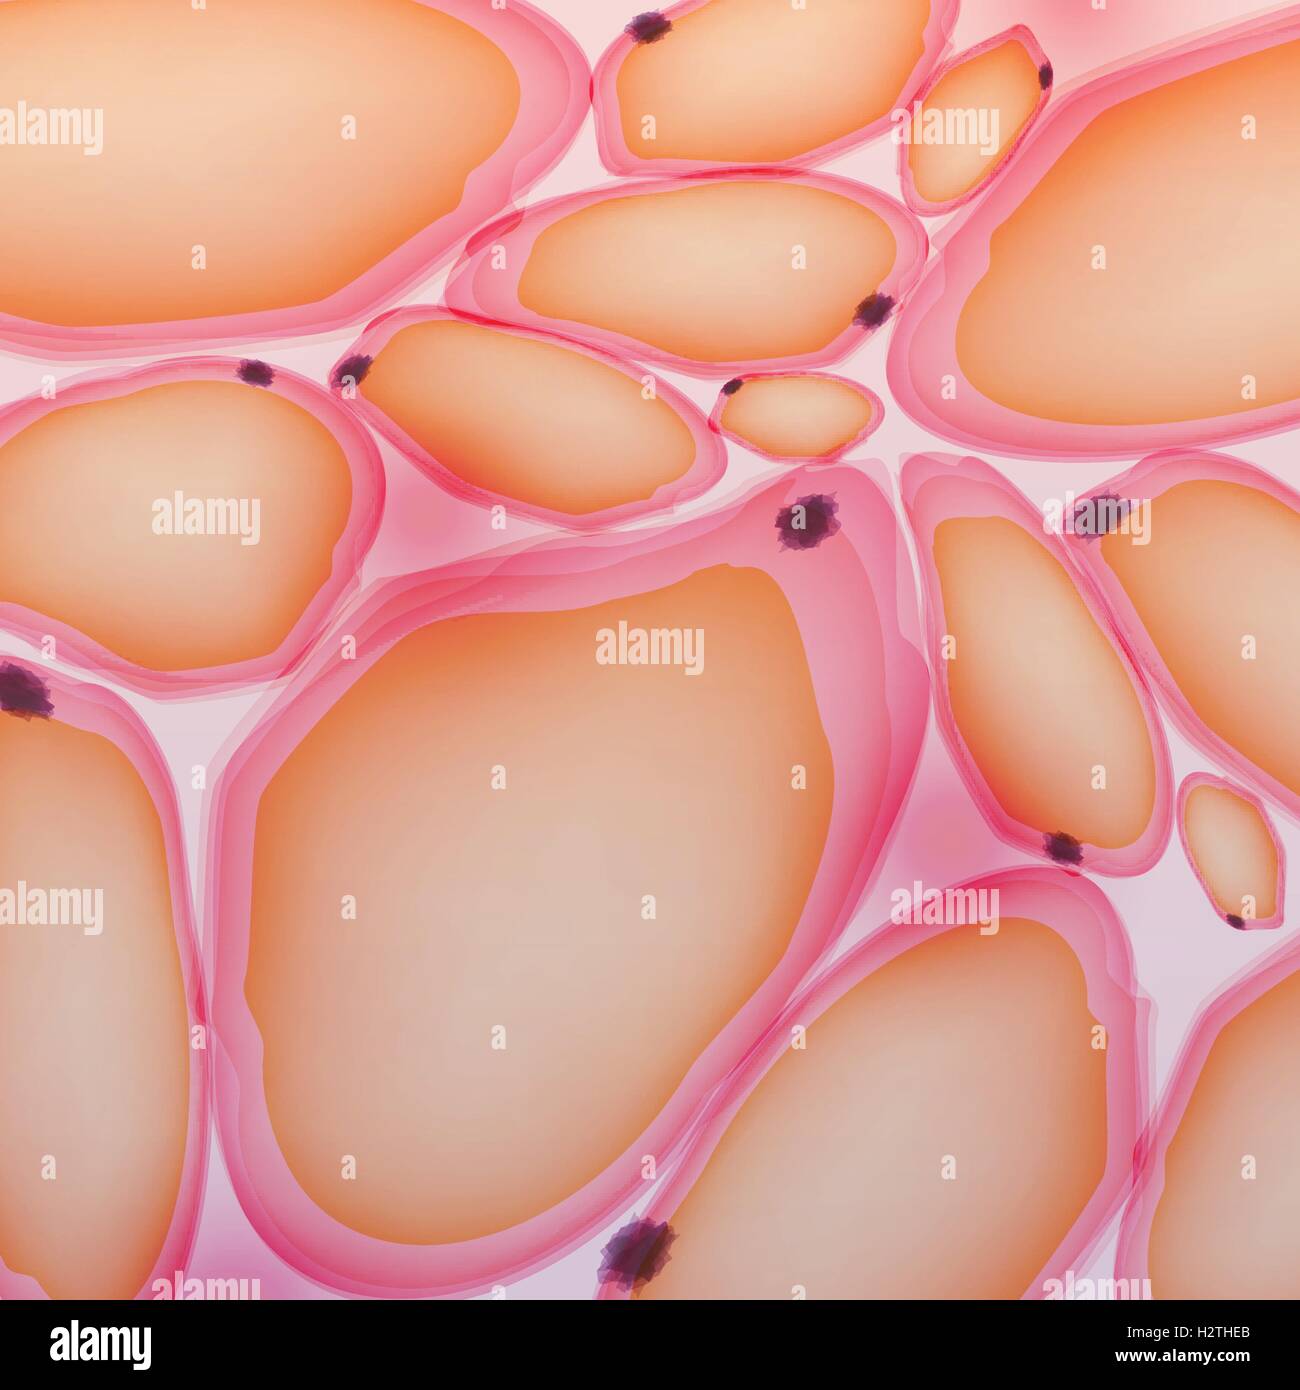 Adipose tissue, Fat Cells, Adipocytes - Vector Illustration Stock Vector